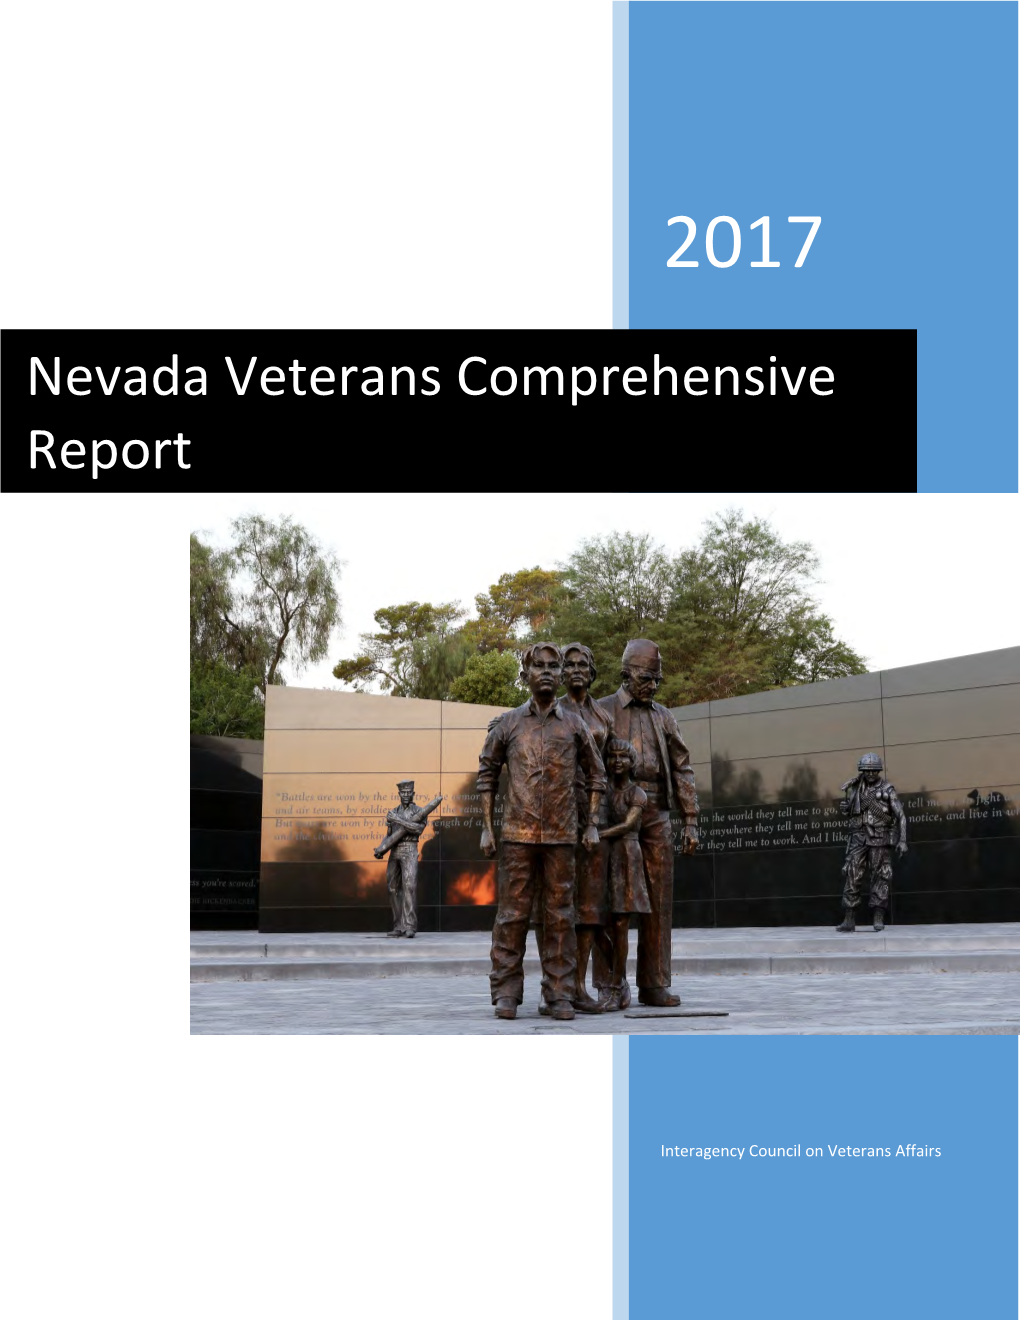 Nevada Veterans Comprehensive Report